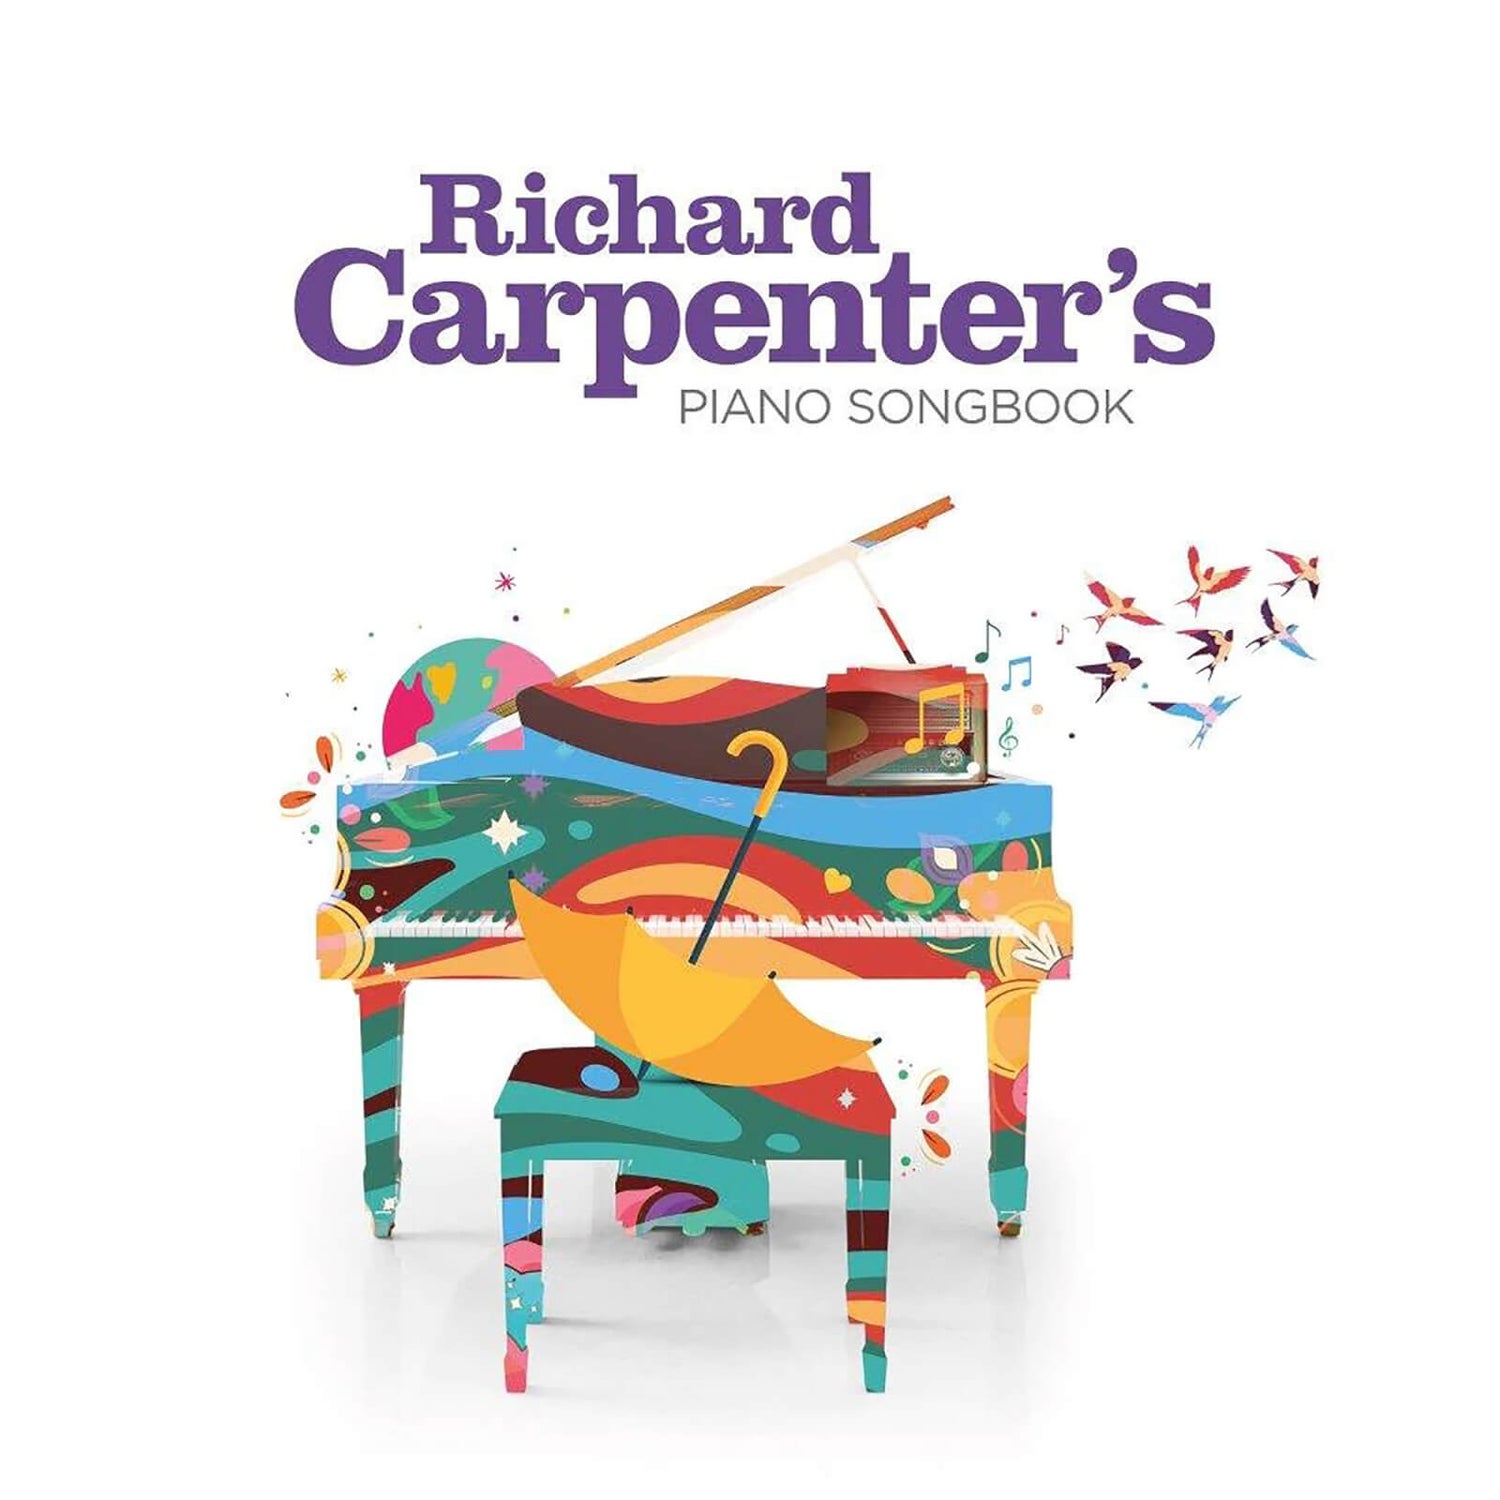 Richard Carpenter - Richard Carpenter's Piano Songbook Vinyl